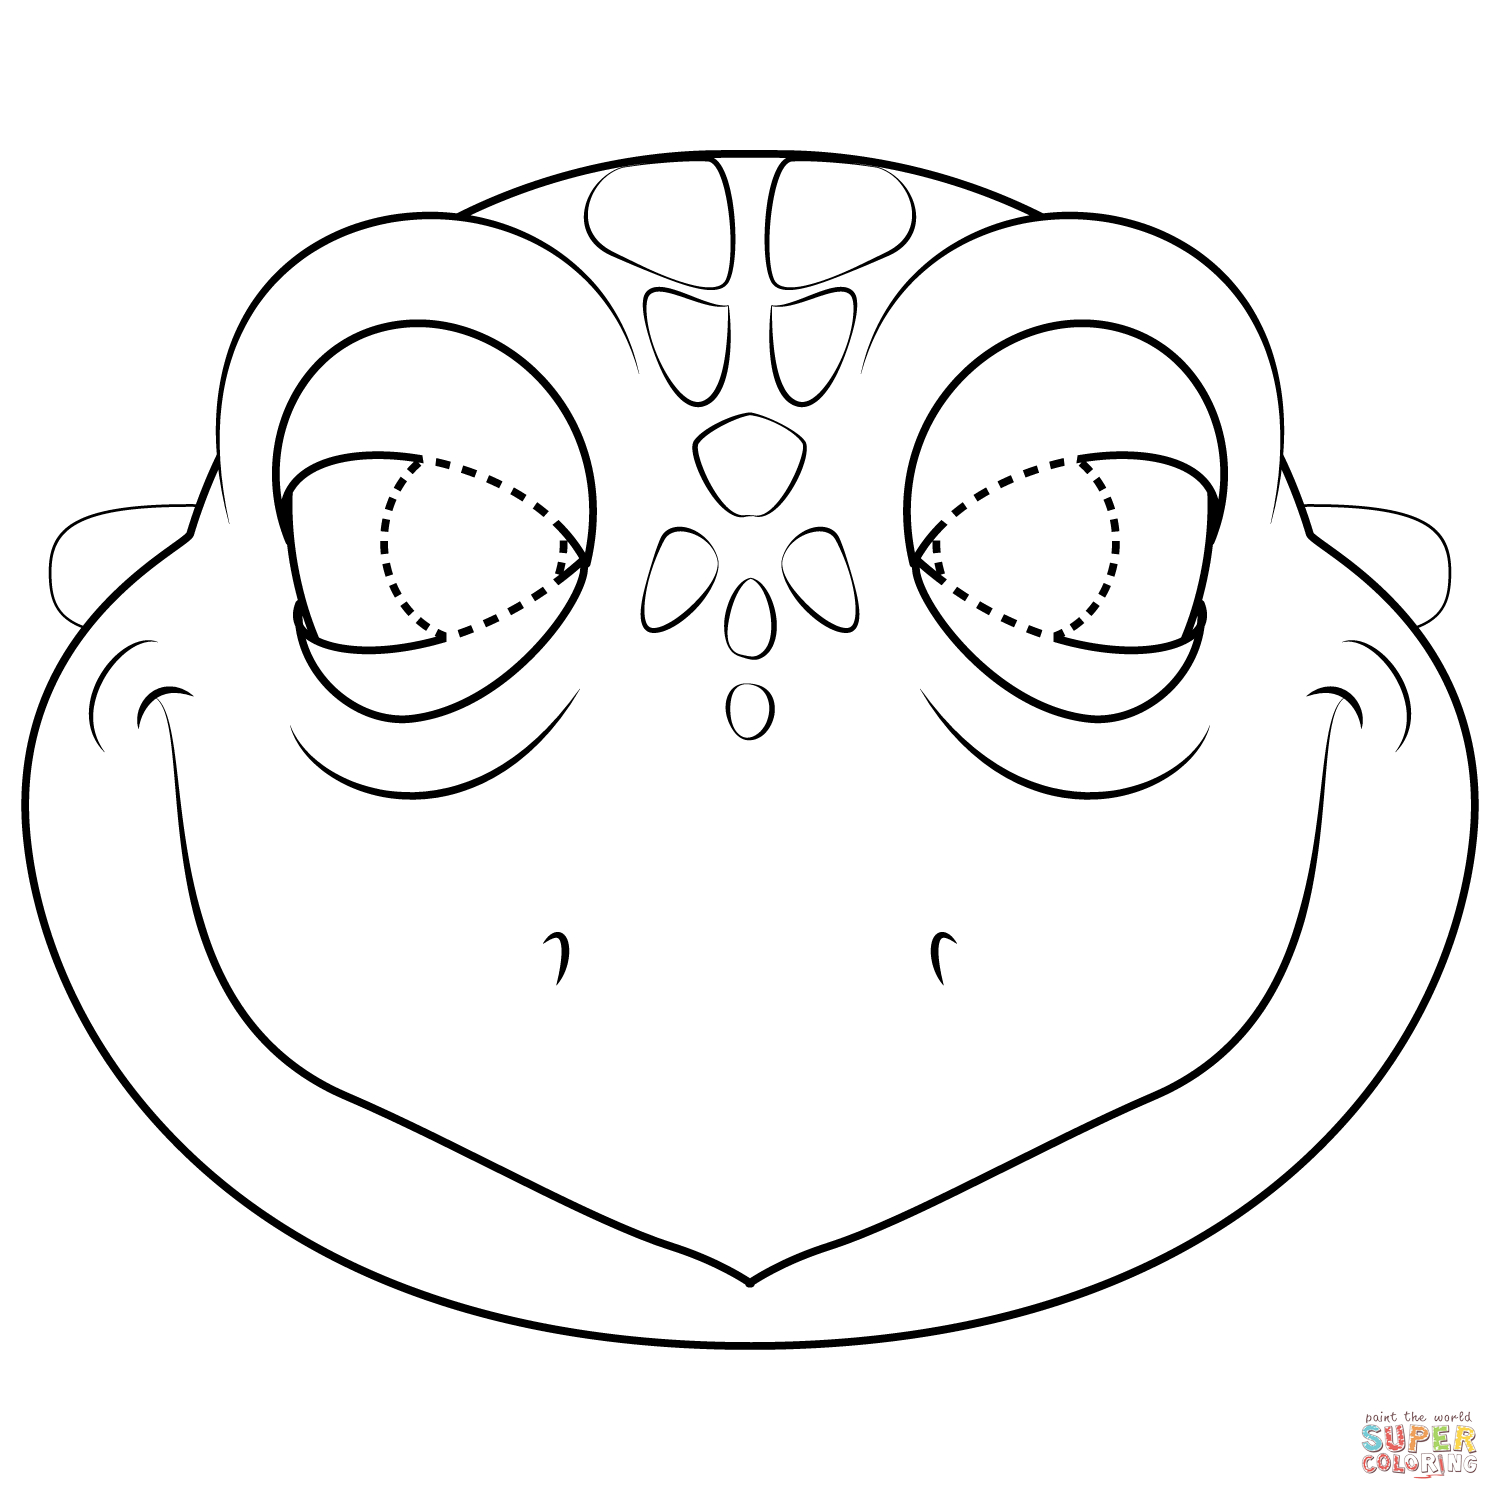 Ninja Turtle Mask Coloring Page Turtle Mask Coloring Page Free Printable Coloring Pages